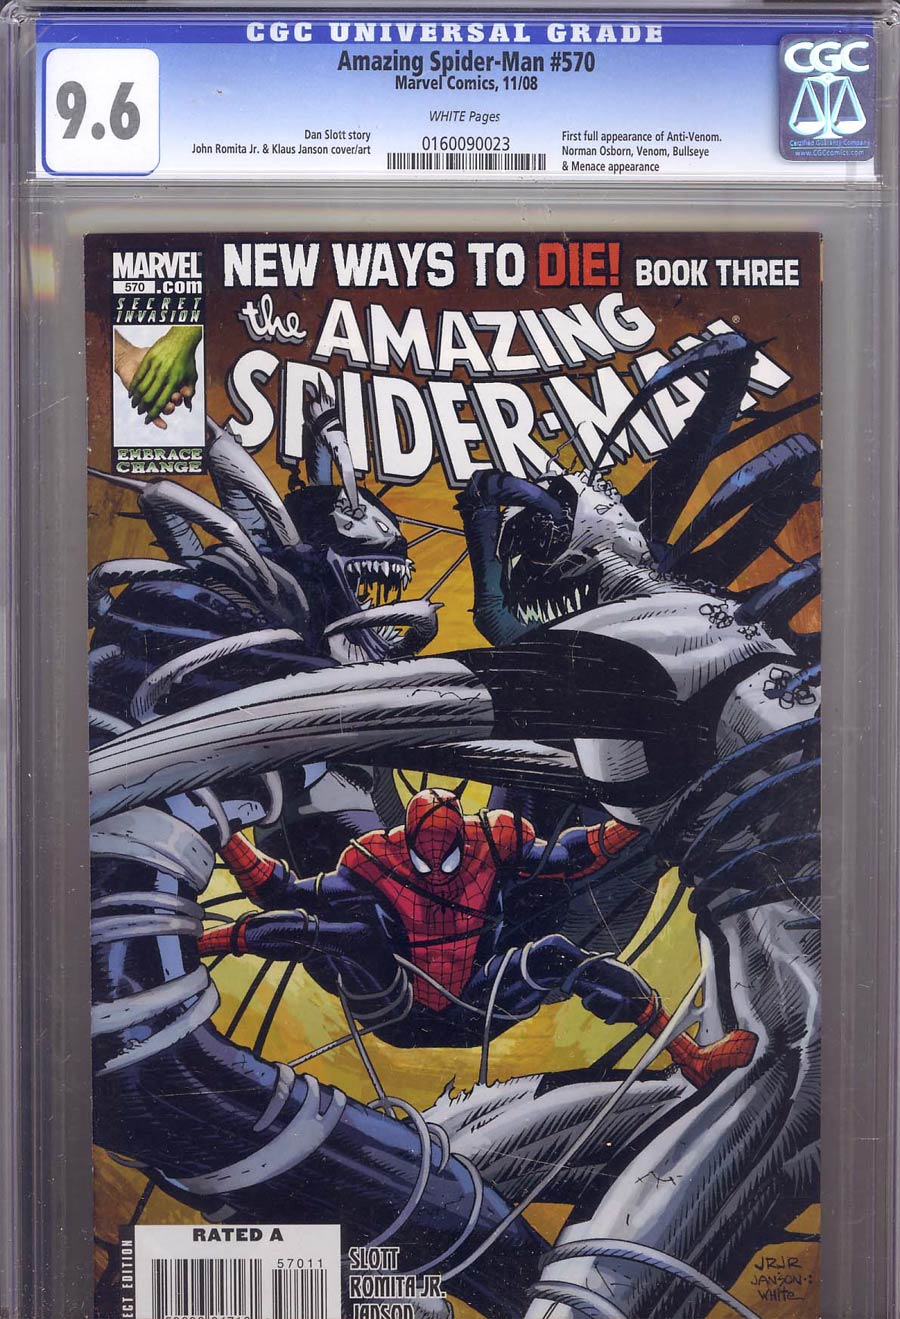 Amazing Spider-Man Vol 2 #570 CGC 9.6 1st Ptg Regular John Romita Jr Cover